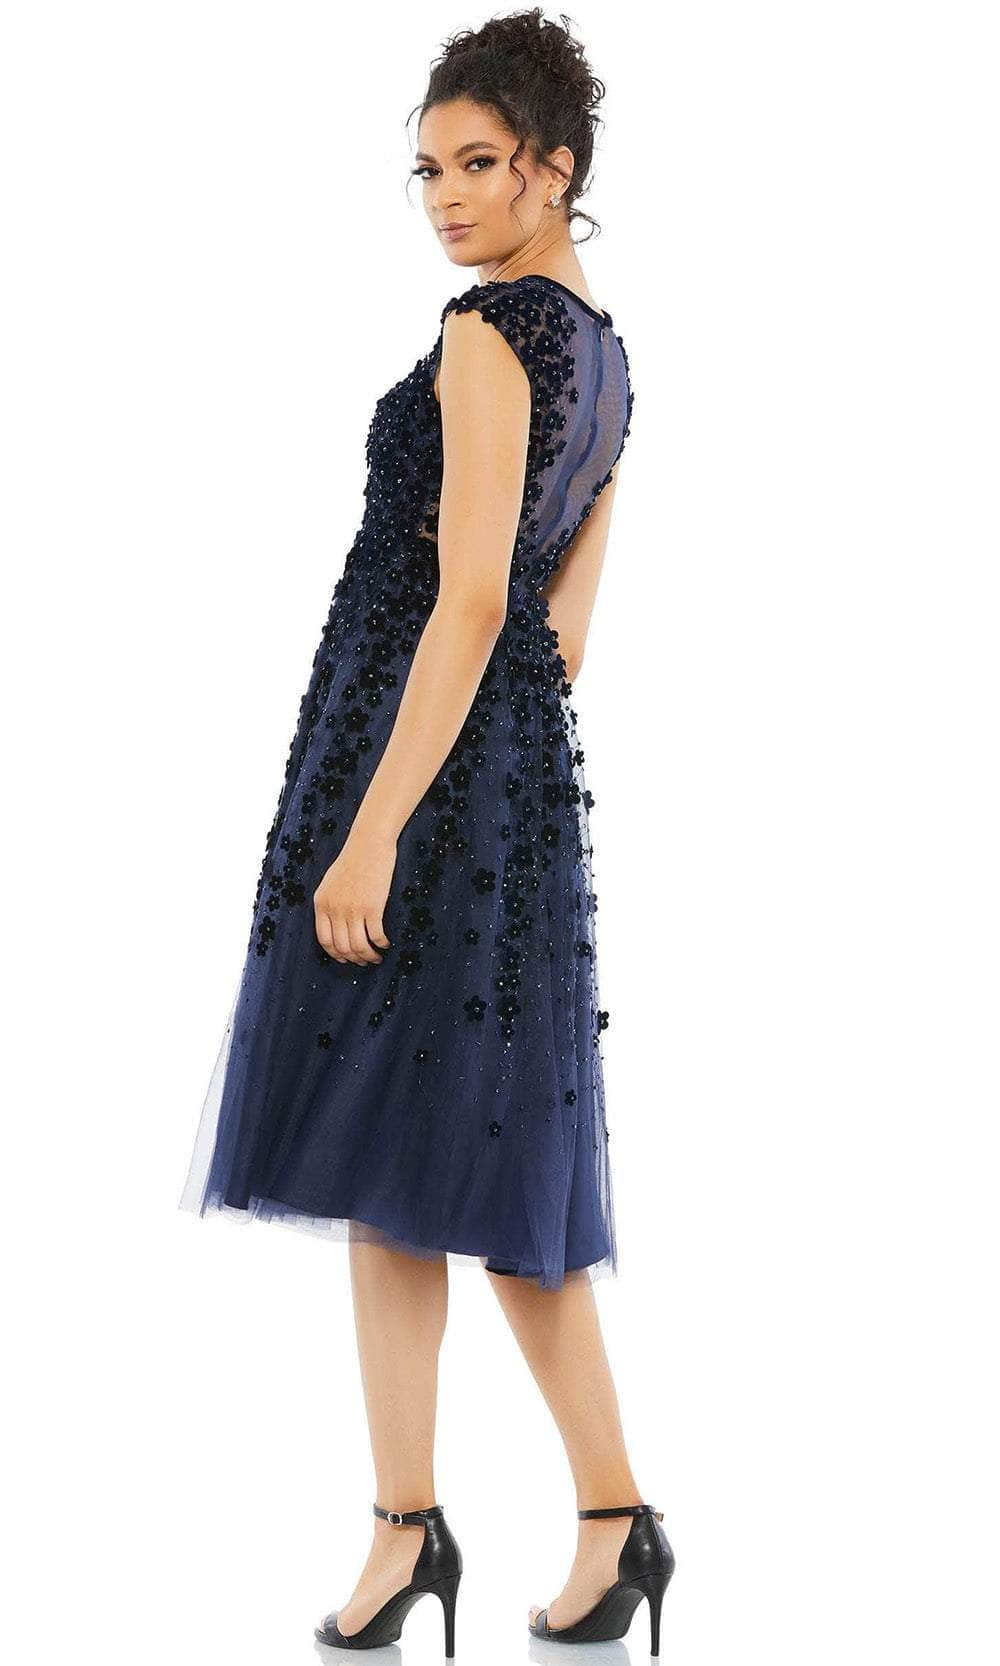 Mac Duggal 67910 - Cap Sleeve Floral Applique Cocktail Dress Special Occasion Dress